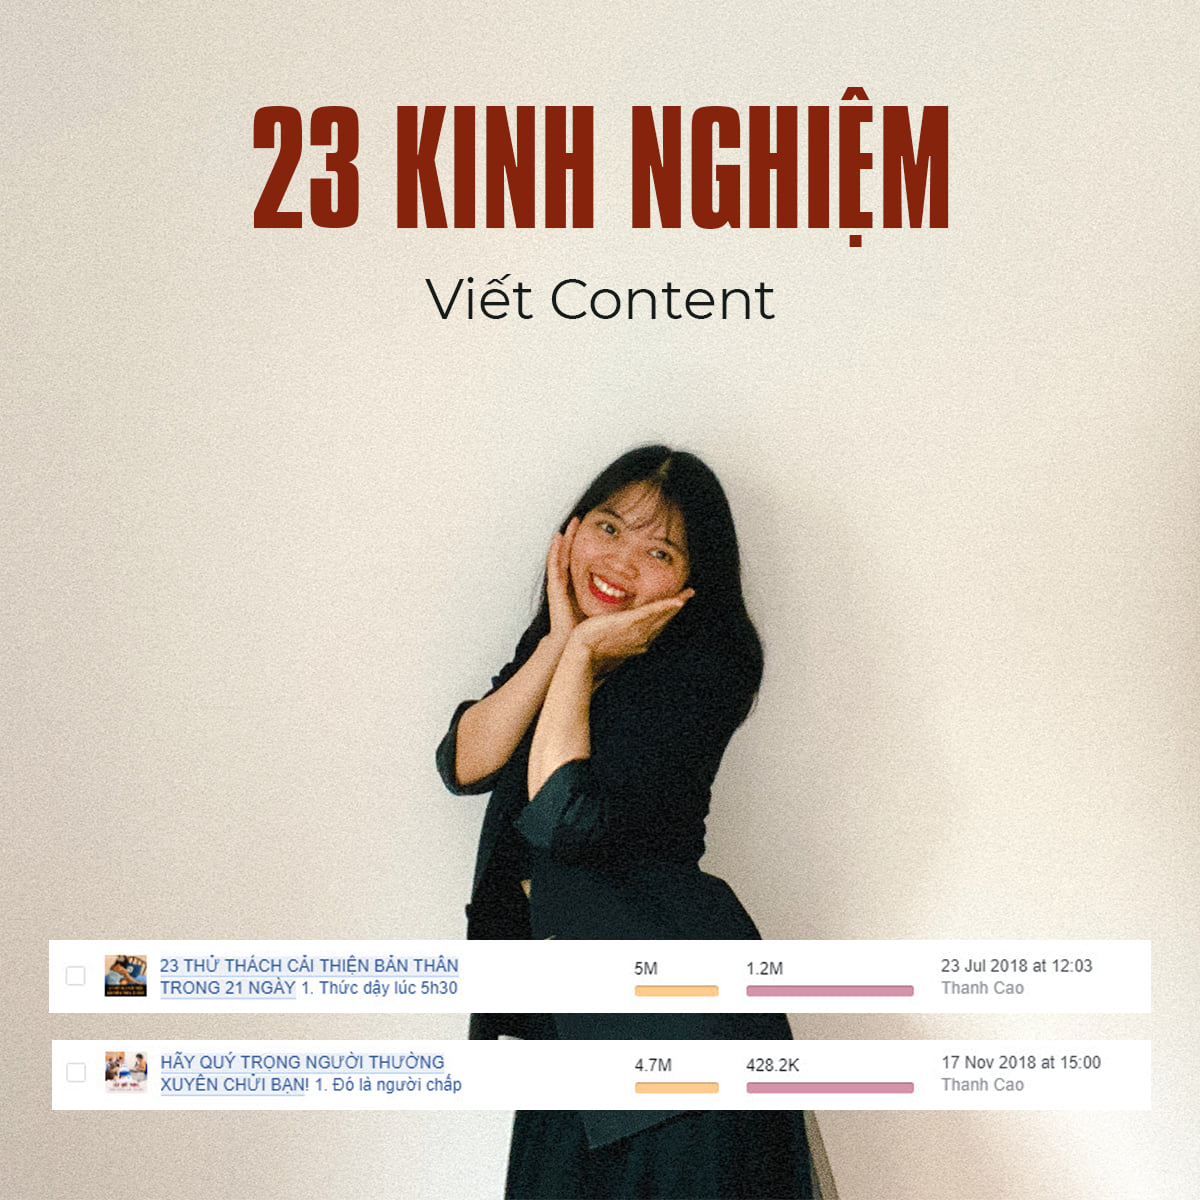 23 kinh nghiem viet content Thanh Cao